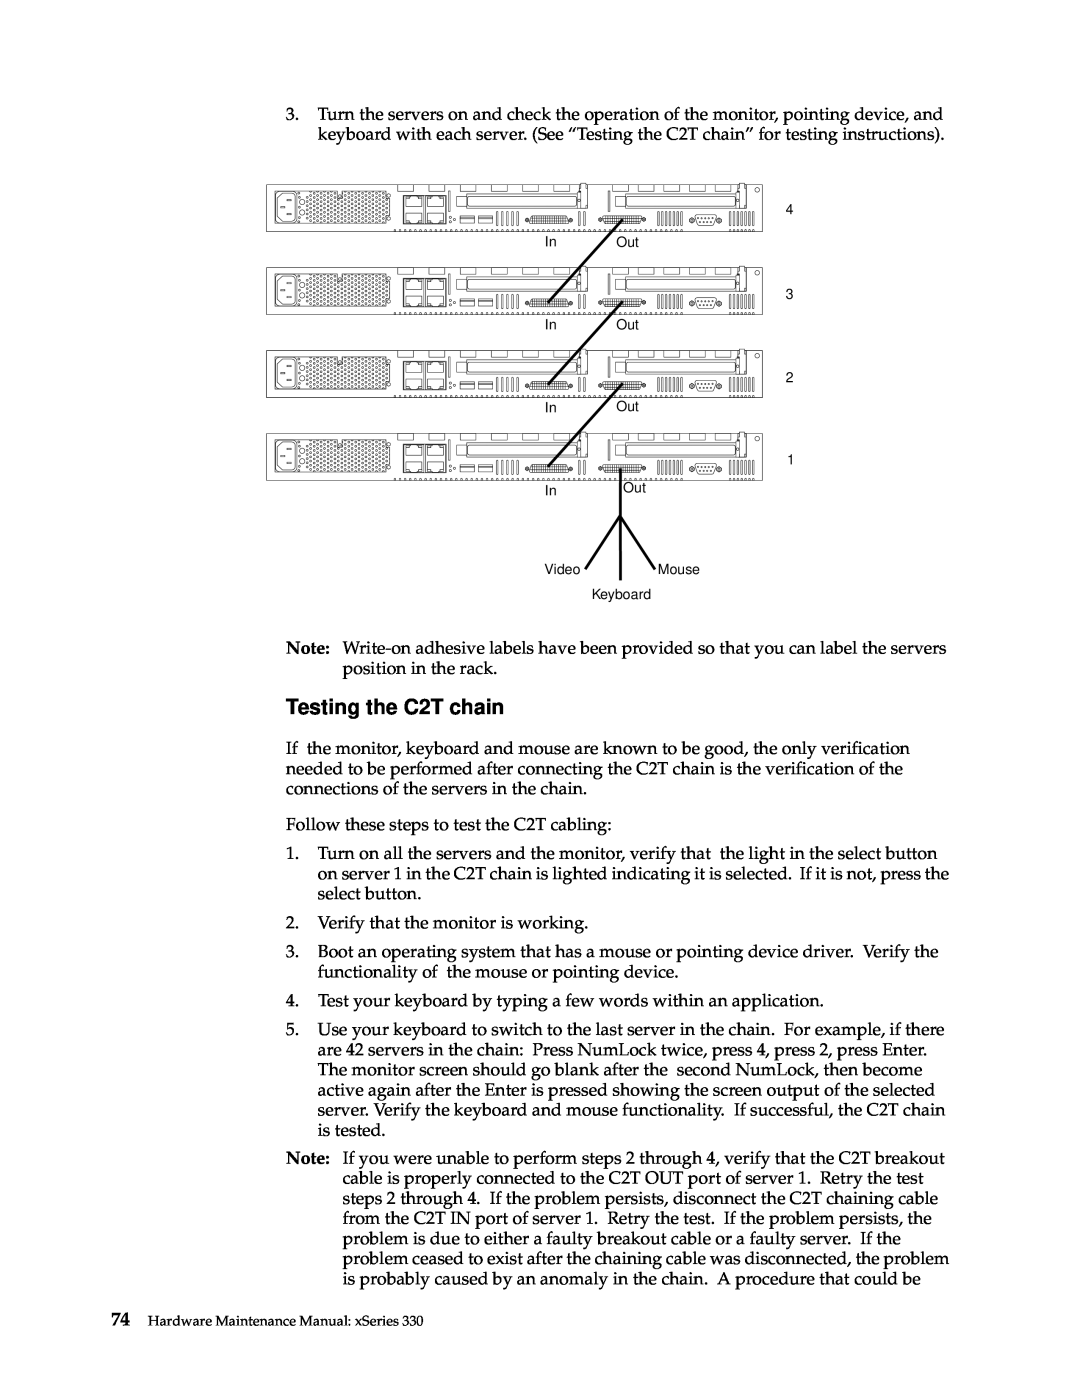 IBM xSeries 330 manual Testing the C2T chain 